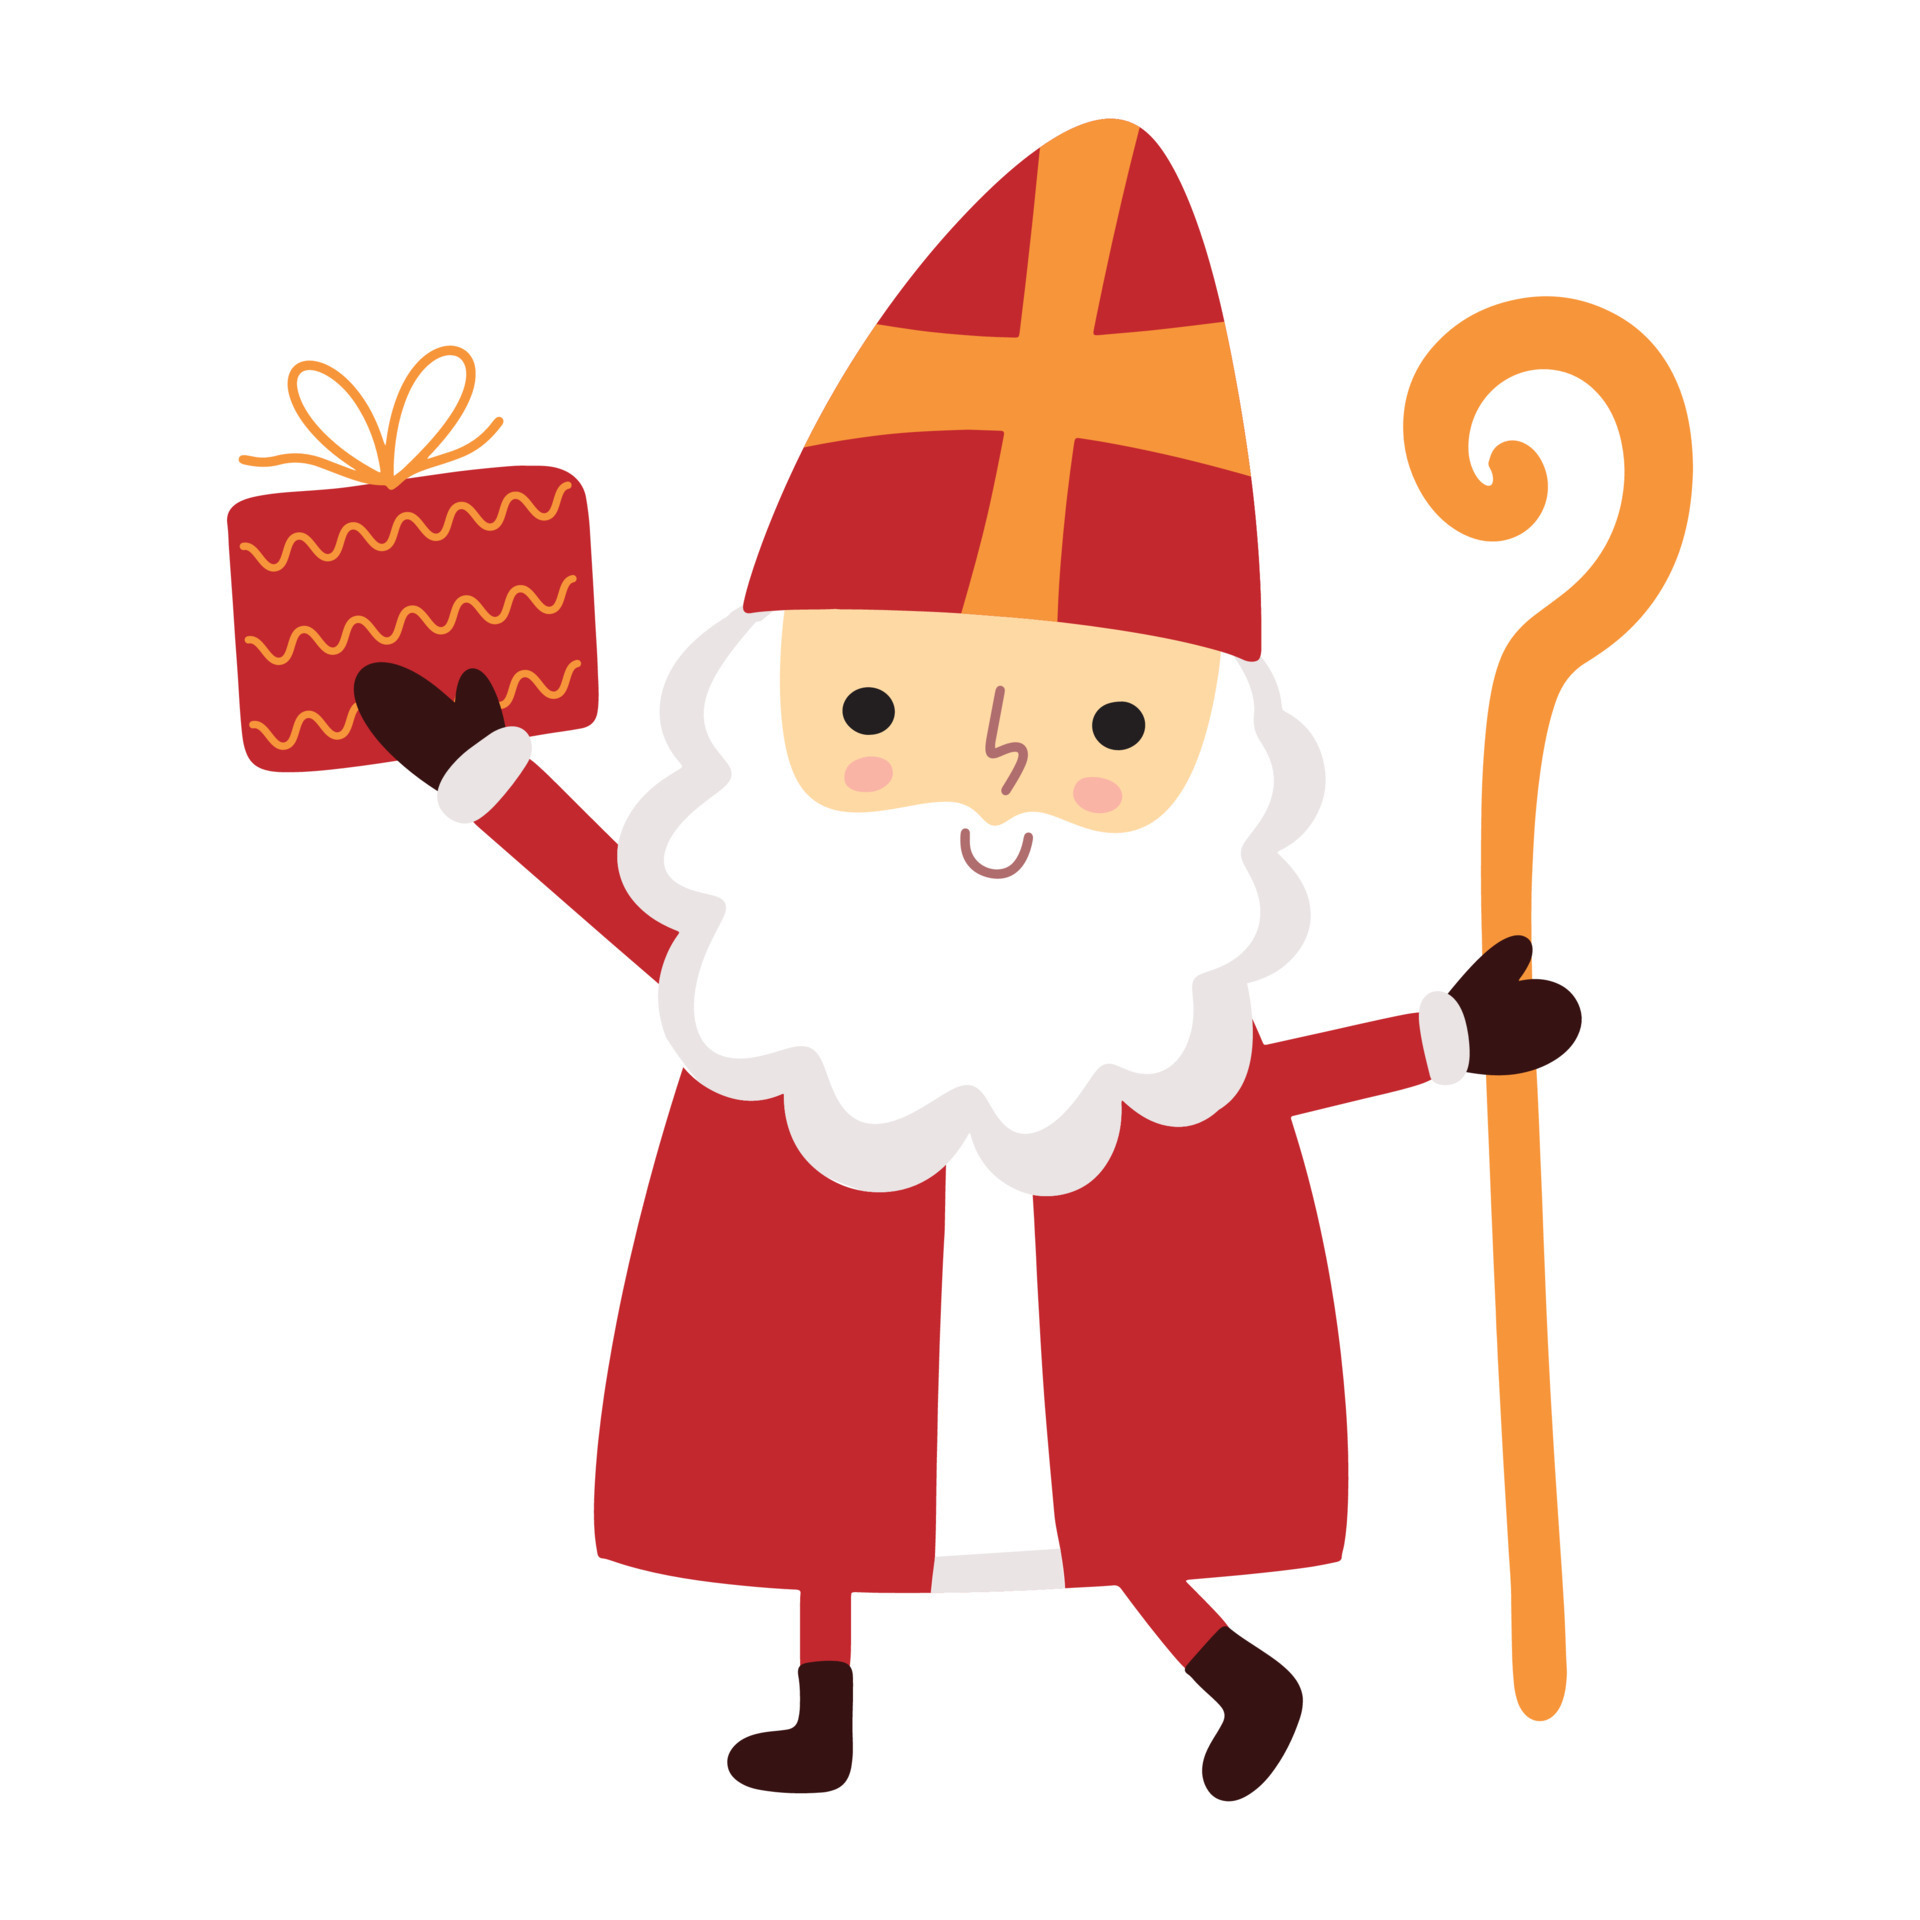 Cute Saint Nicholas or Sinterklaas character. Happy St Nicholas day